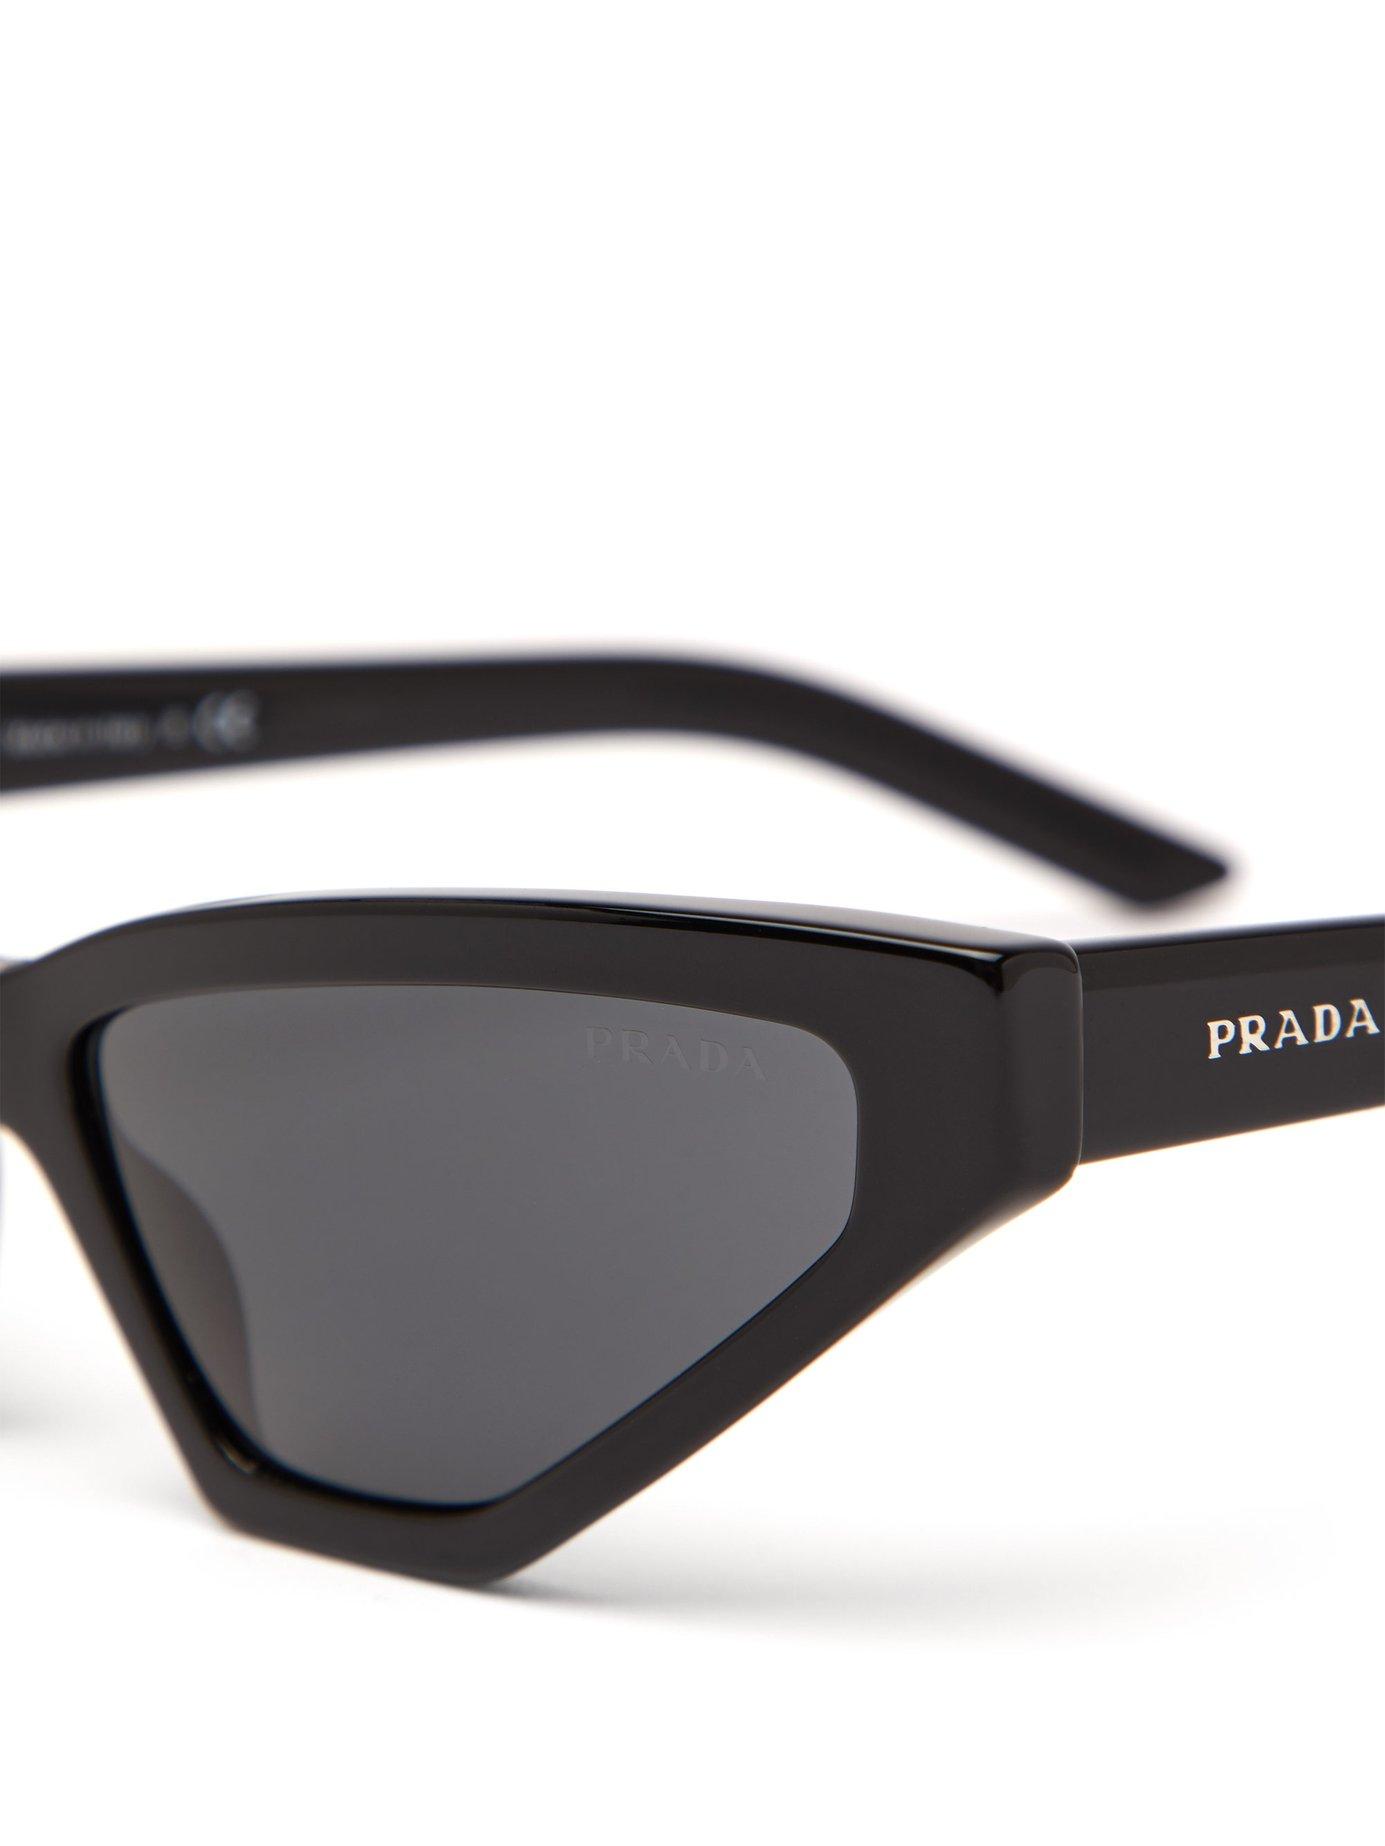 Prada Leather Angular Cat Eye Acetate Sunglasses in Black | Lyst